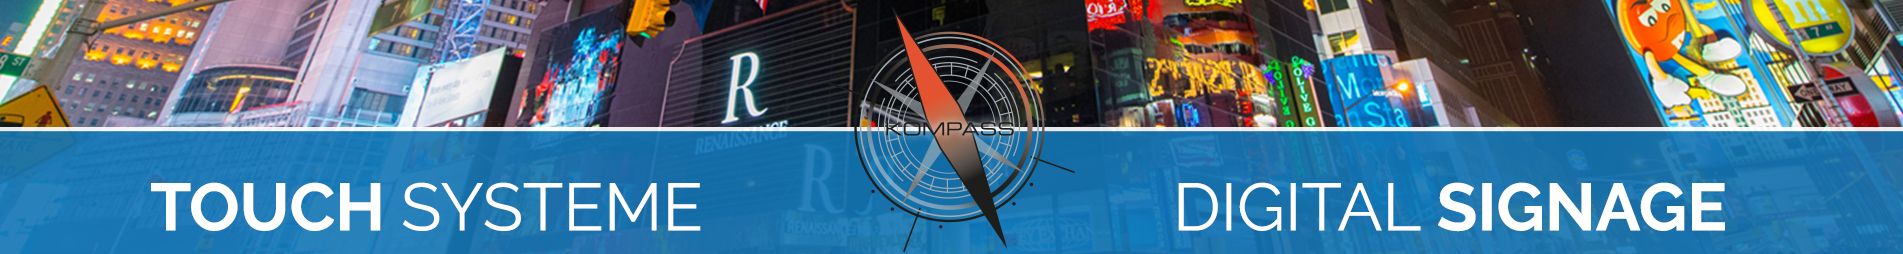 KOMPASS-DigitalSignage